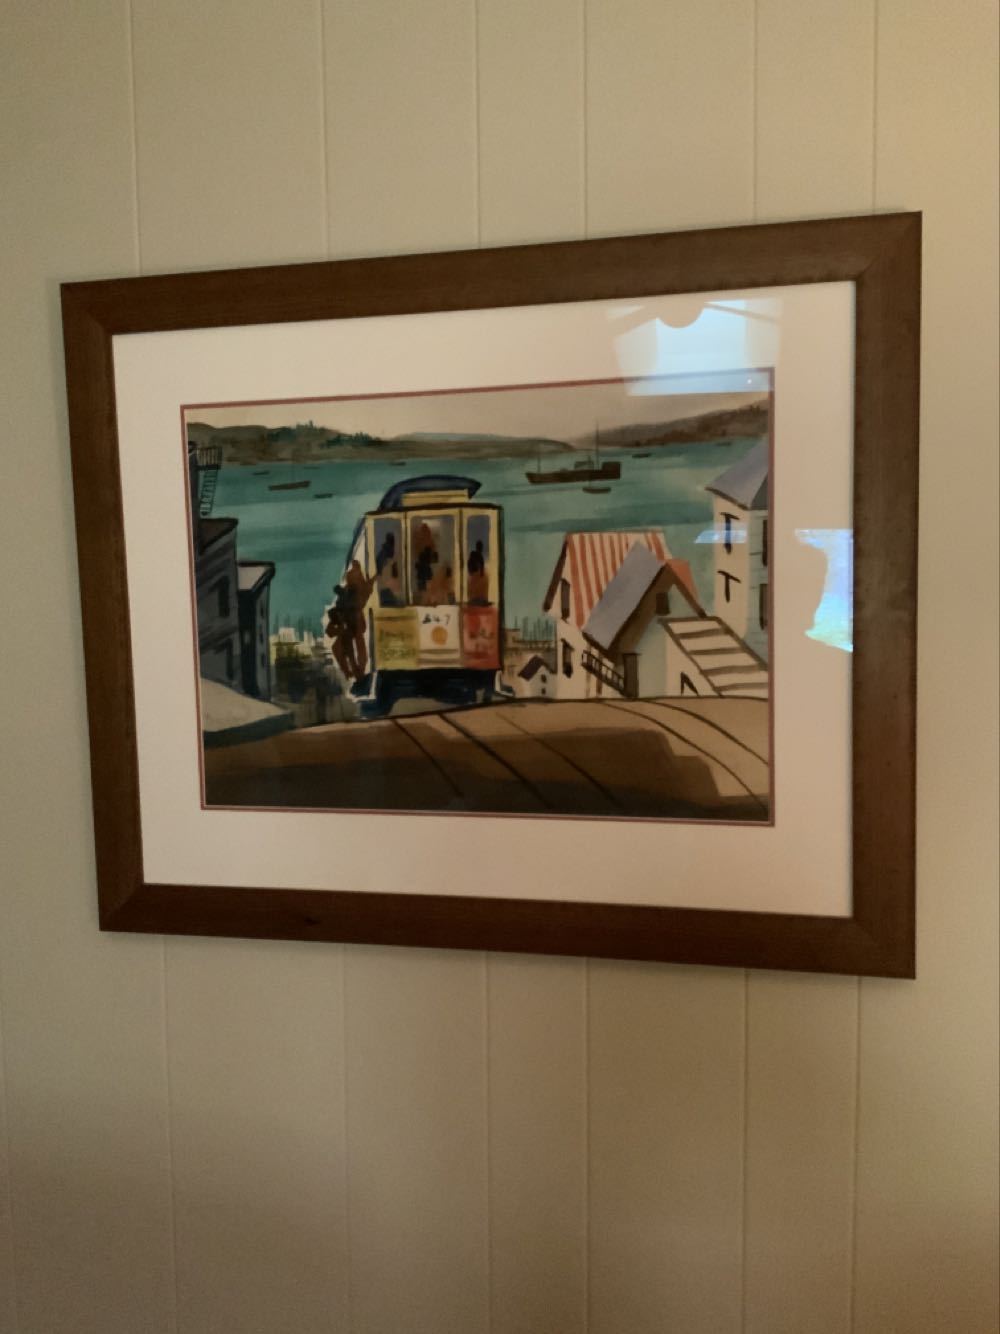 Trolley In San Francisco - Barlow art collectible - Main Image 1